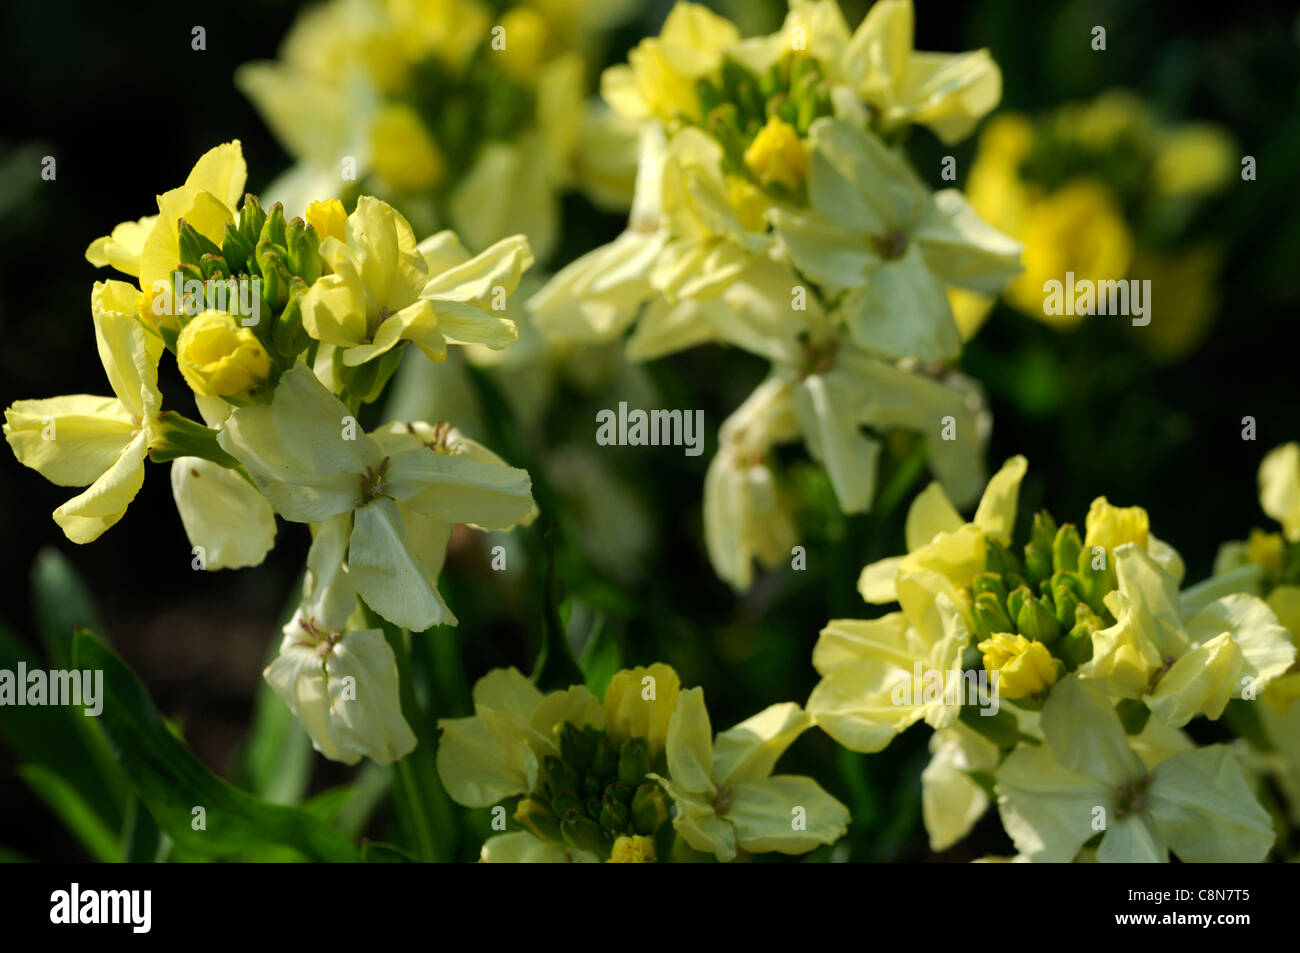 erysimum cheiri primrose bedder syn cheiranthus primrose bedder closeup plant portraits bright yellow petals flowers scented Stock Photo